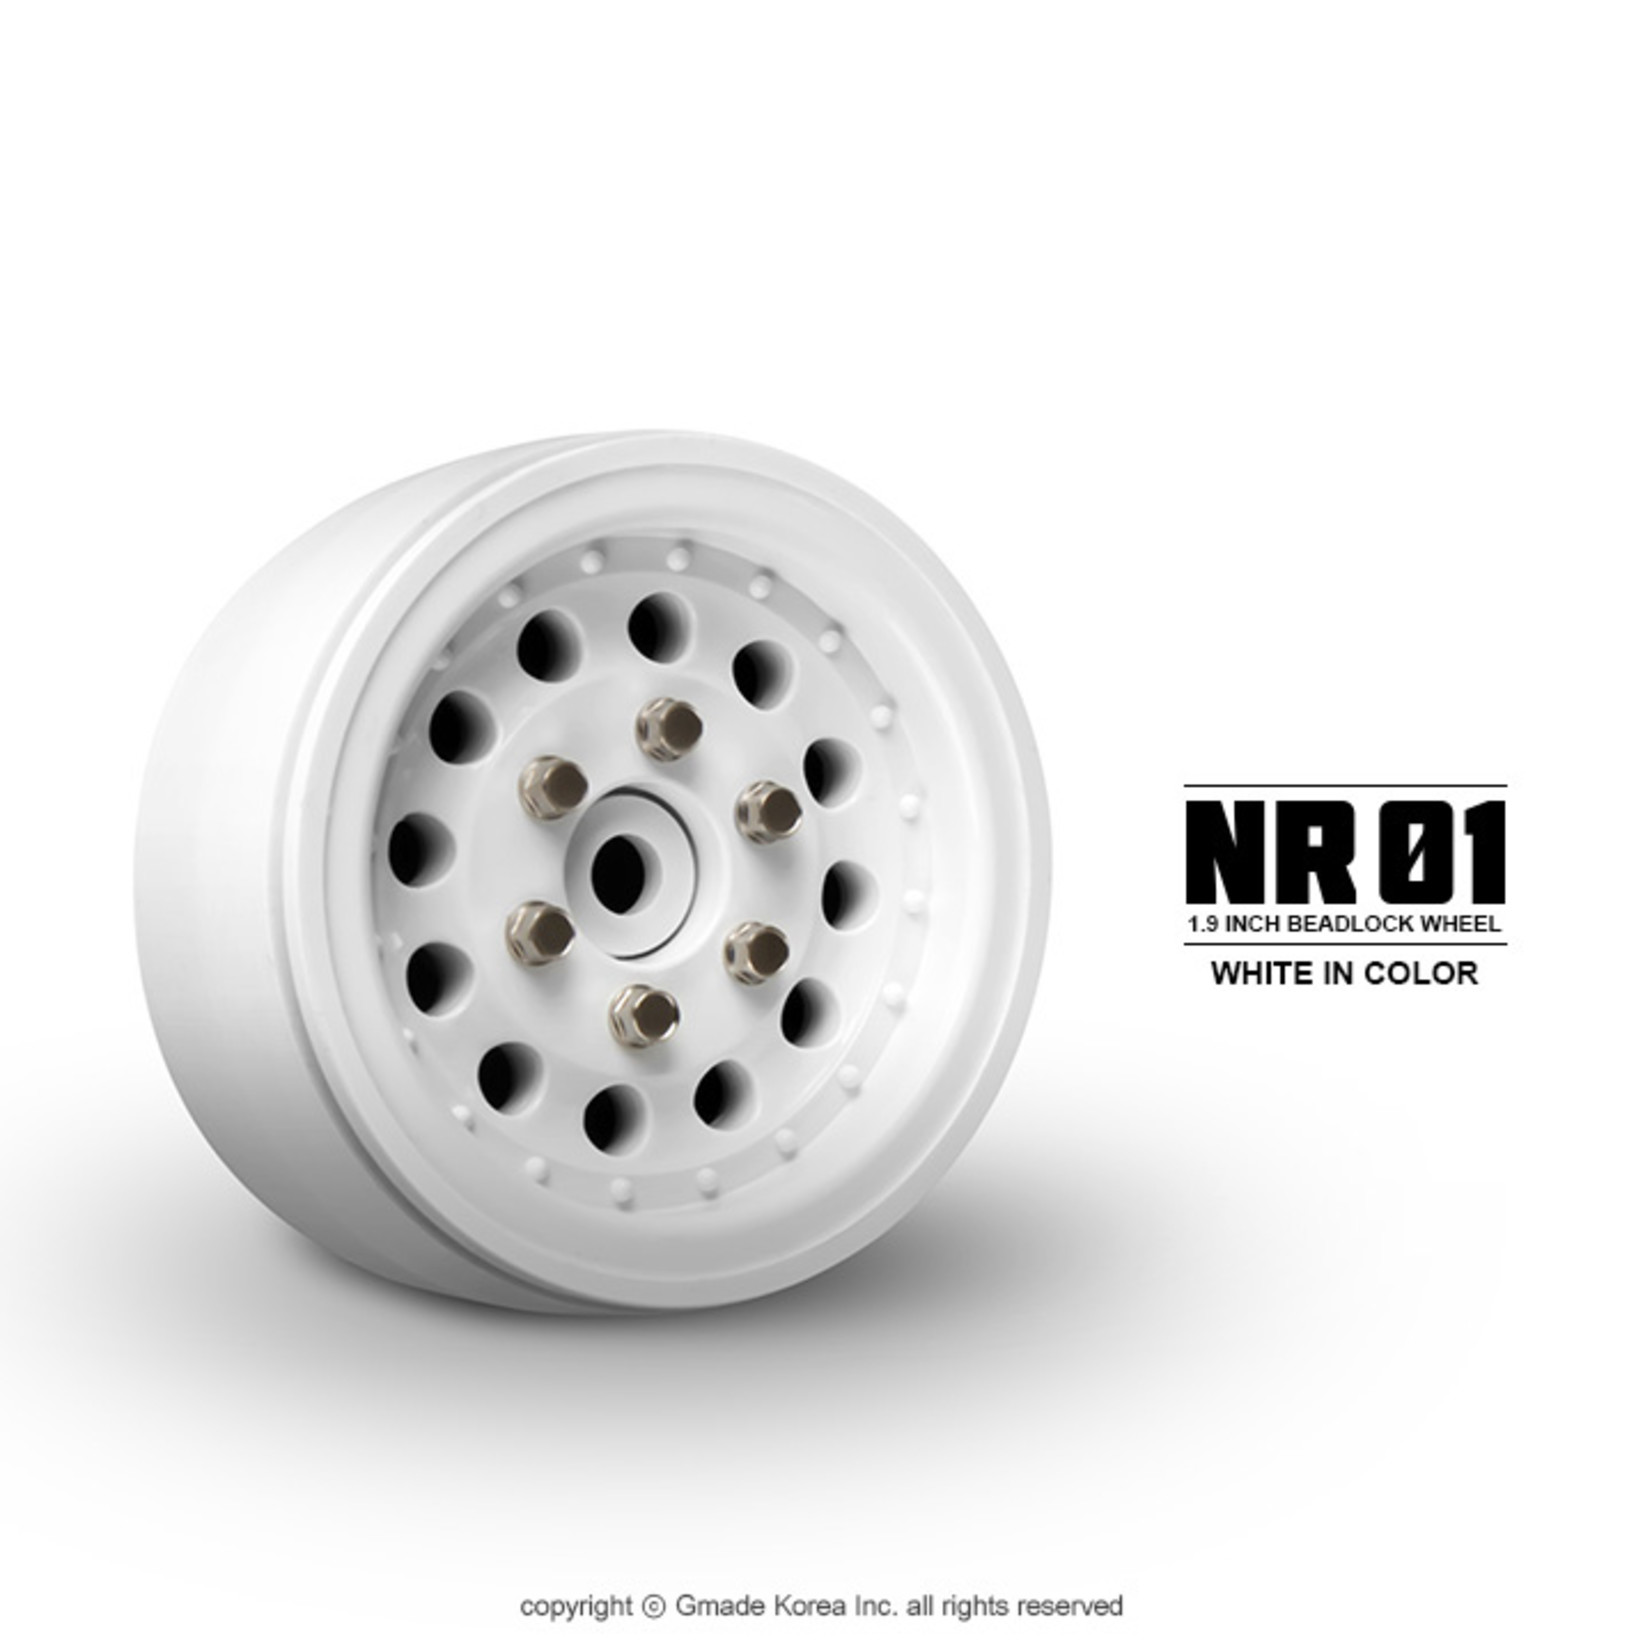 Gmade 1.9 NR01 Beadlock Wheels (White) (2)